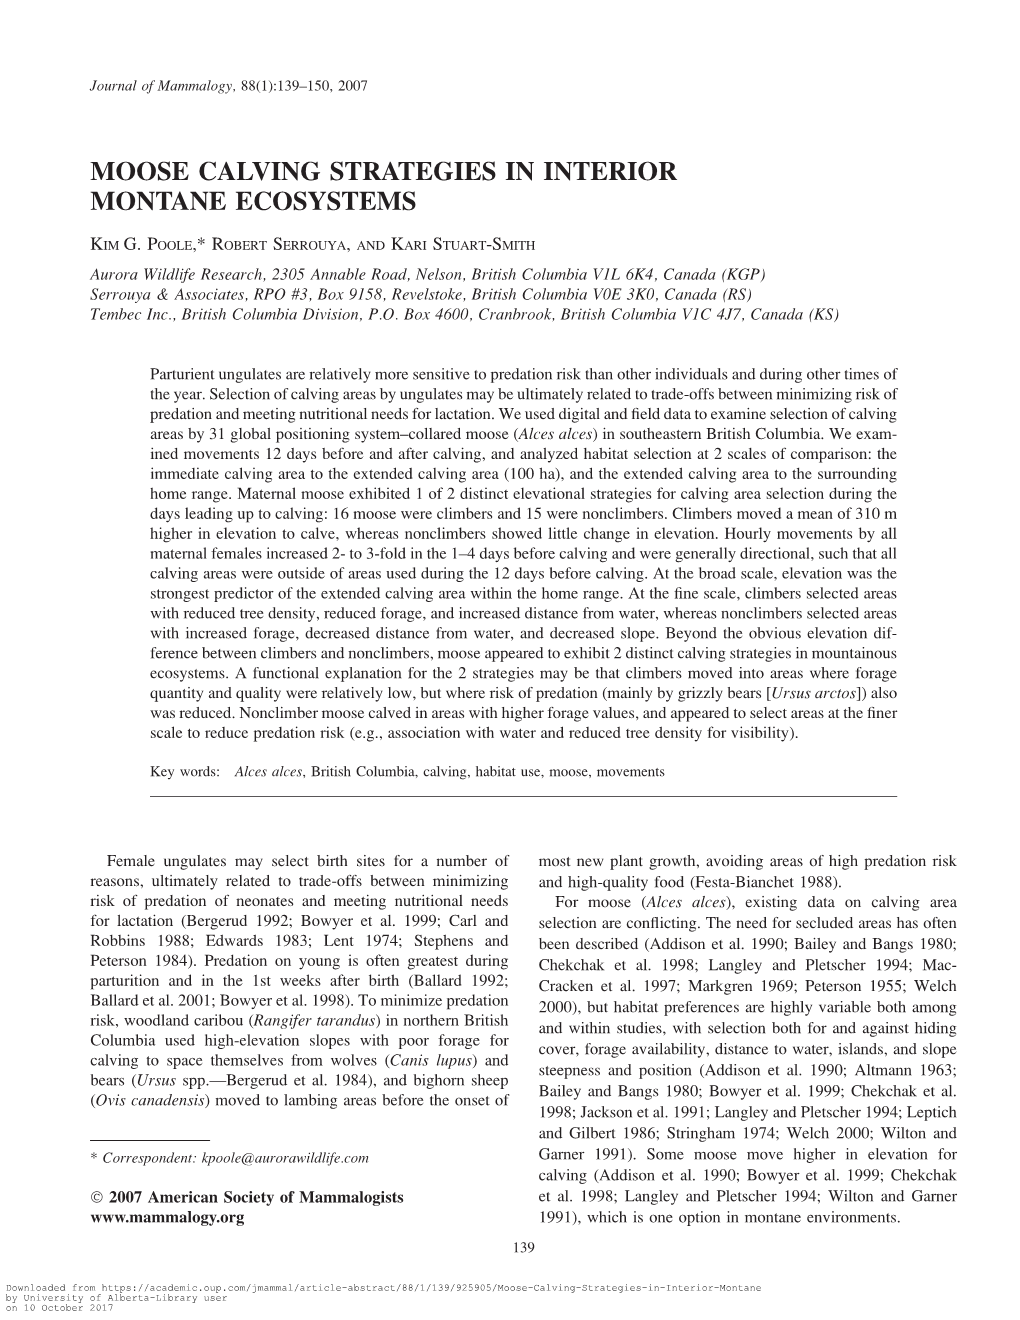 Moose Calving Strategies in Interior Montane Ecosystems